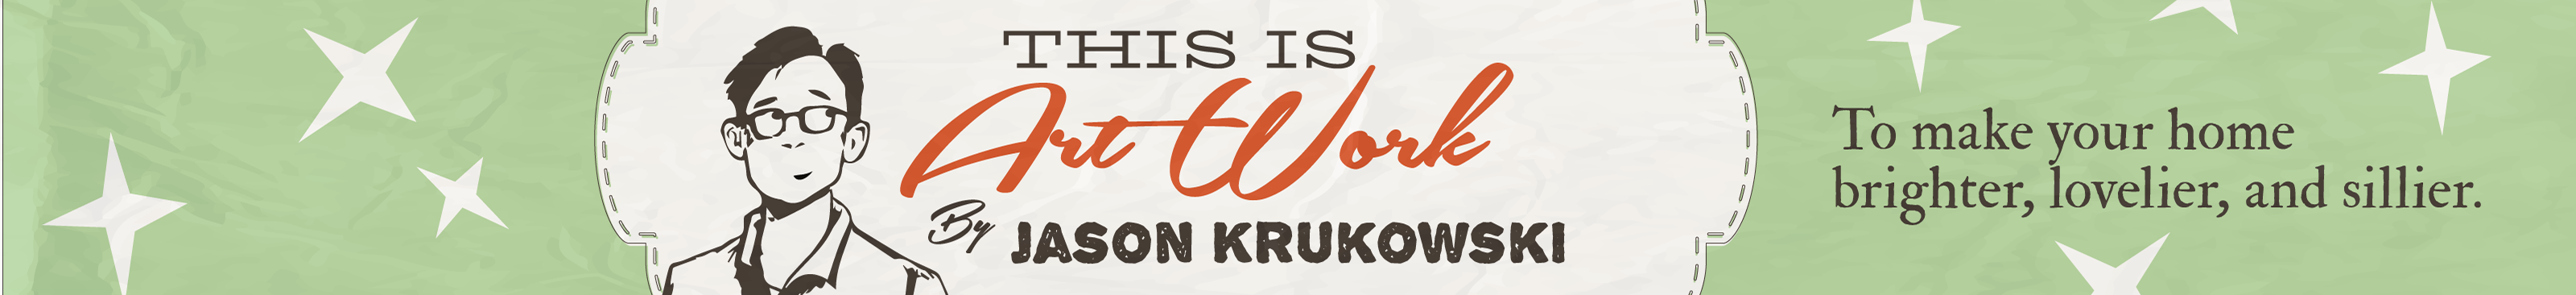 Jason Krukowski's profile banner